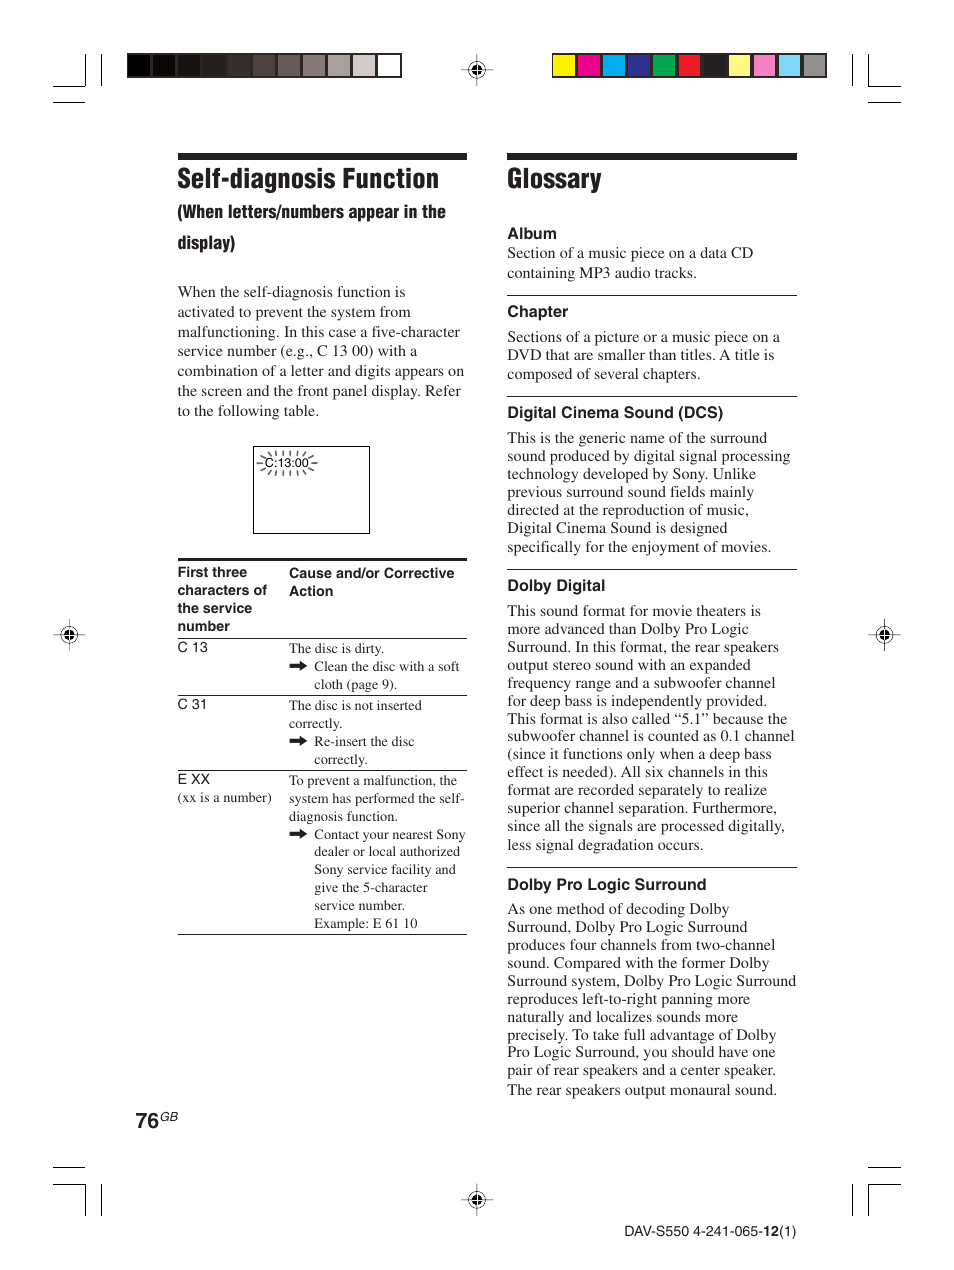 Self Diagnosis Function Glossary Sony Dav S550 User Manual Page 76 84 Original Mode